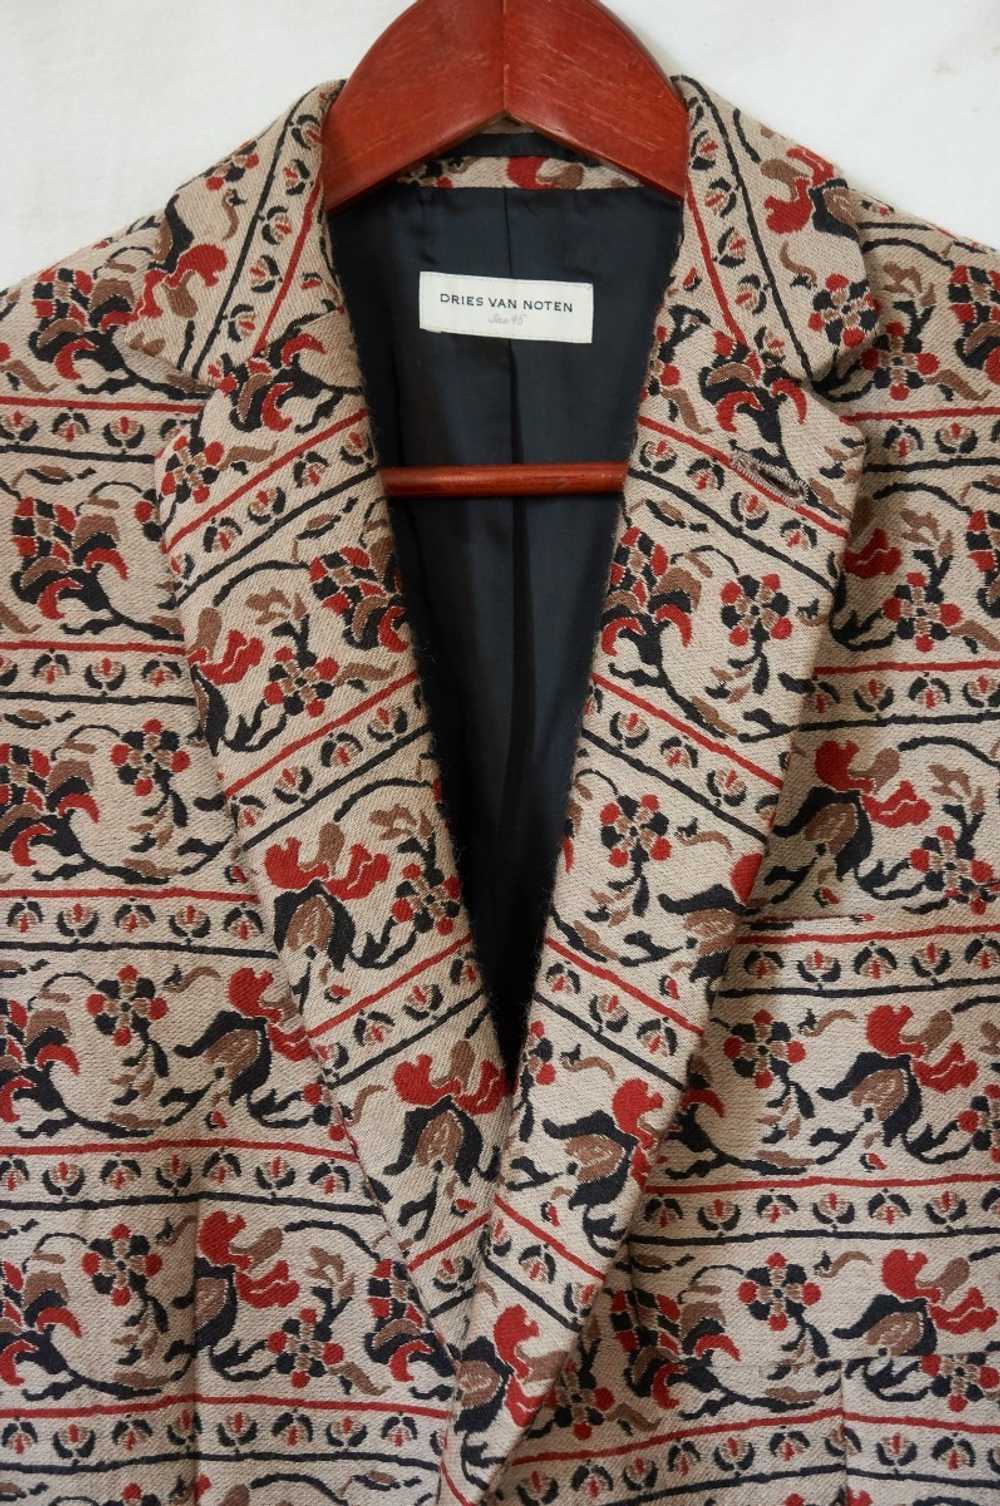 Dries Van Noten AW13 heavy wool floral jacket - image 3